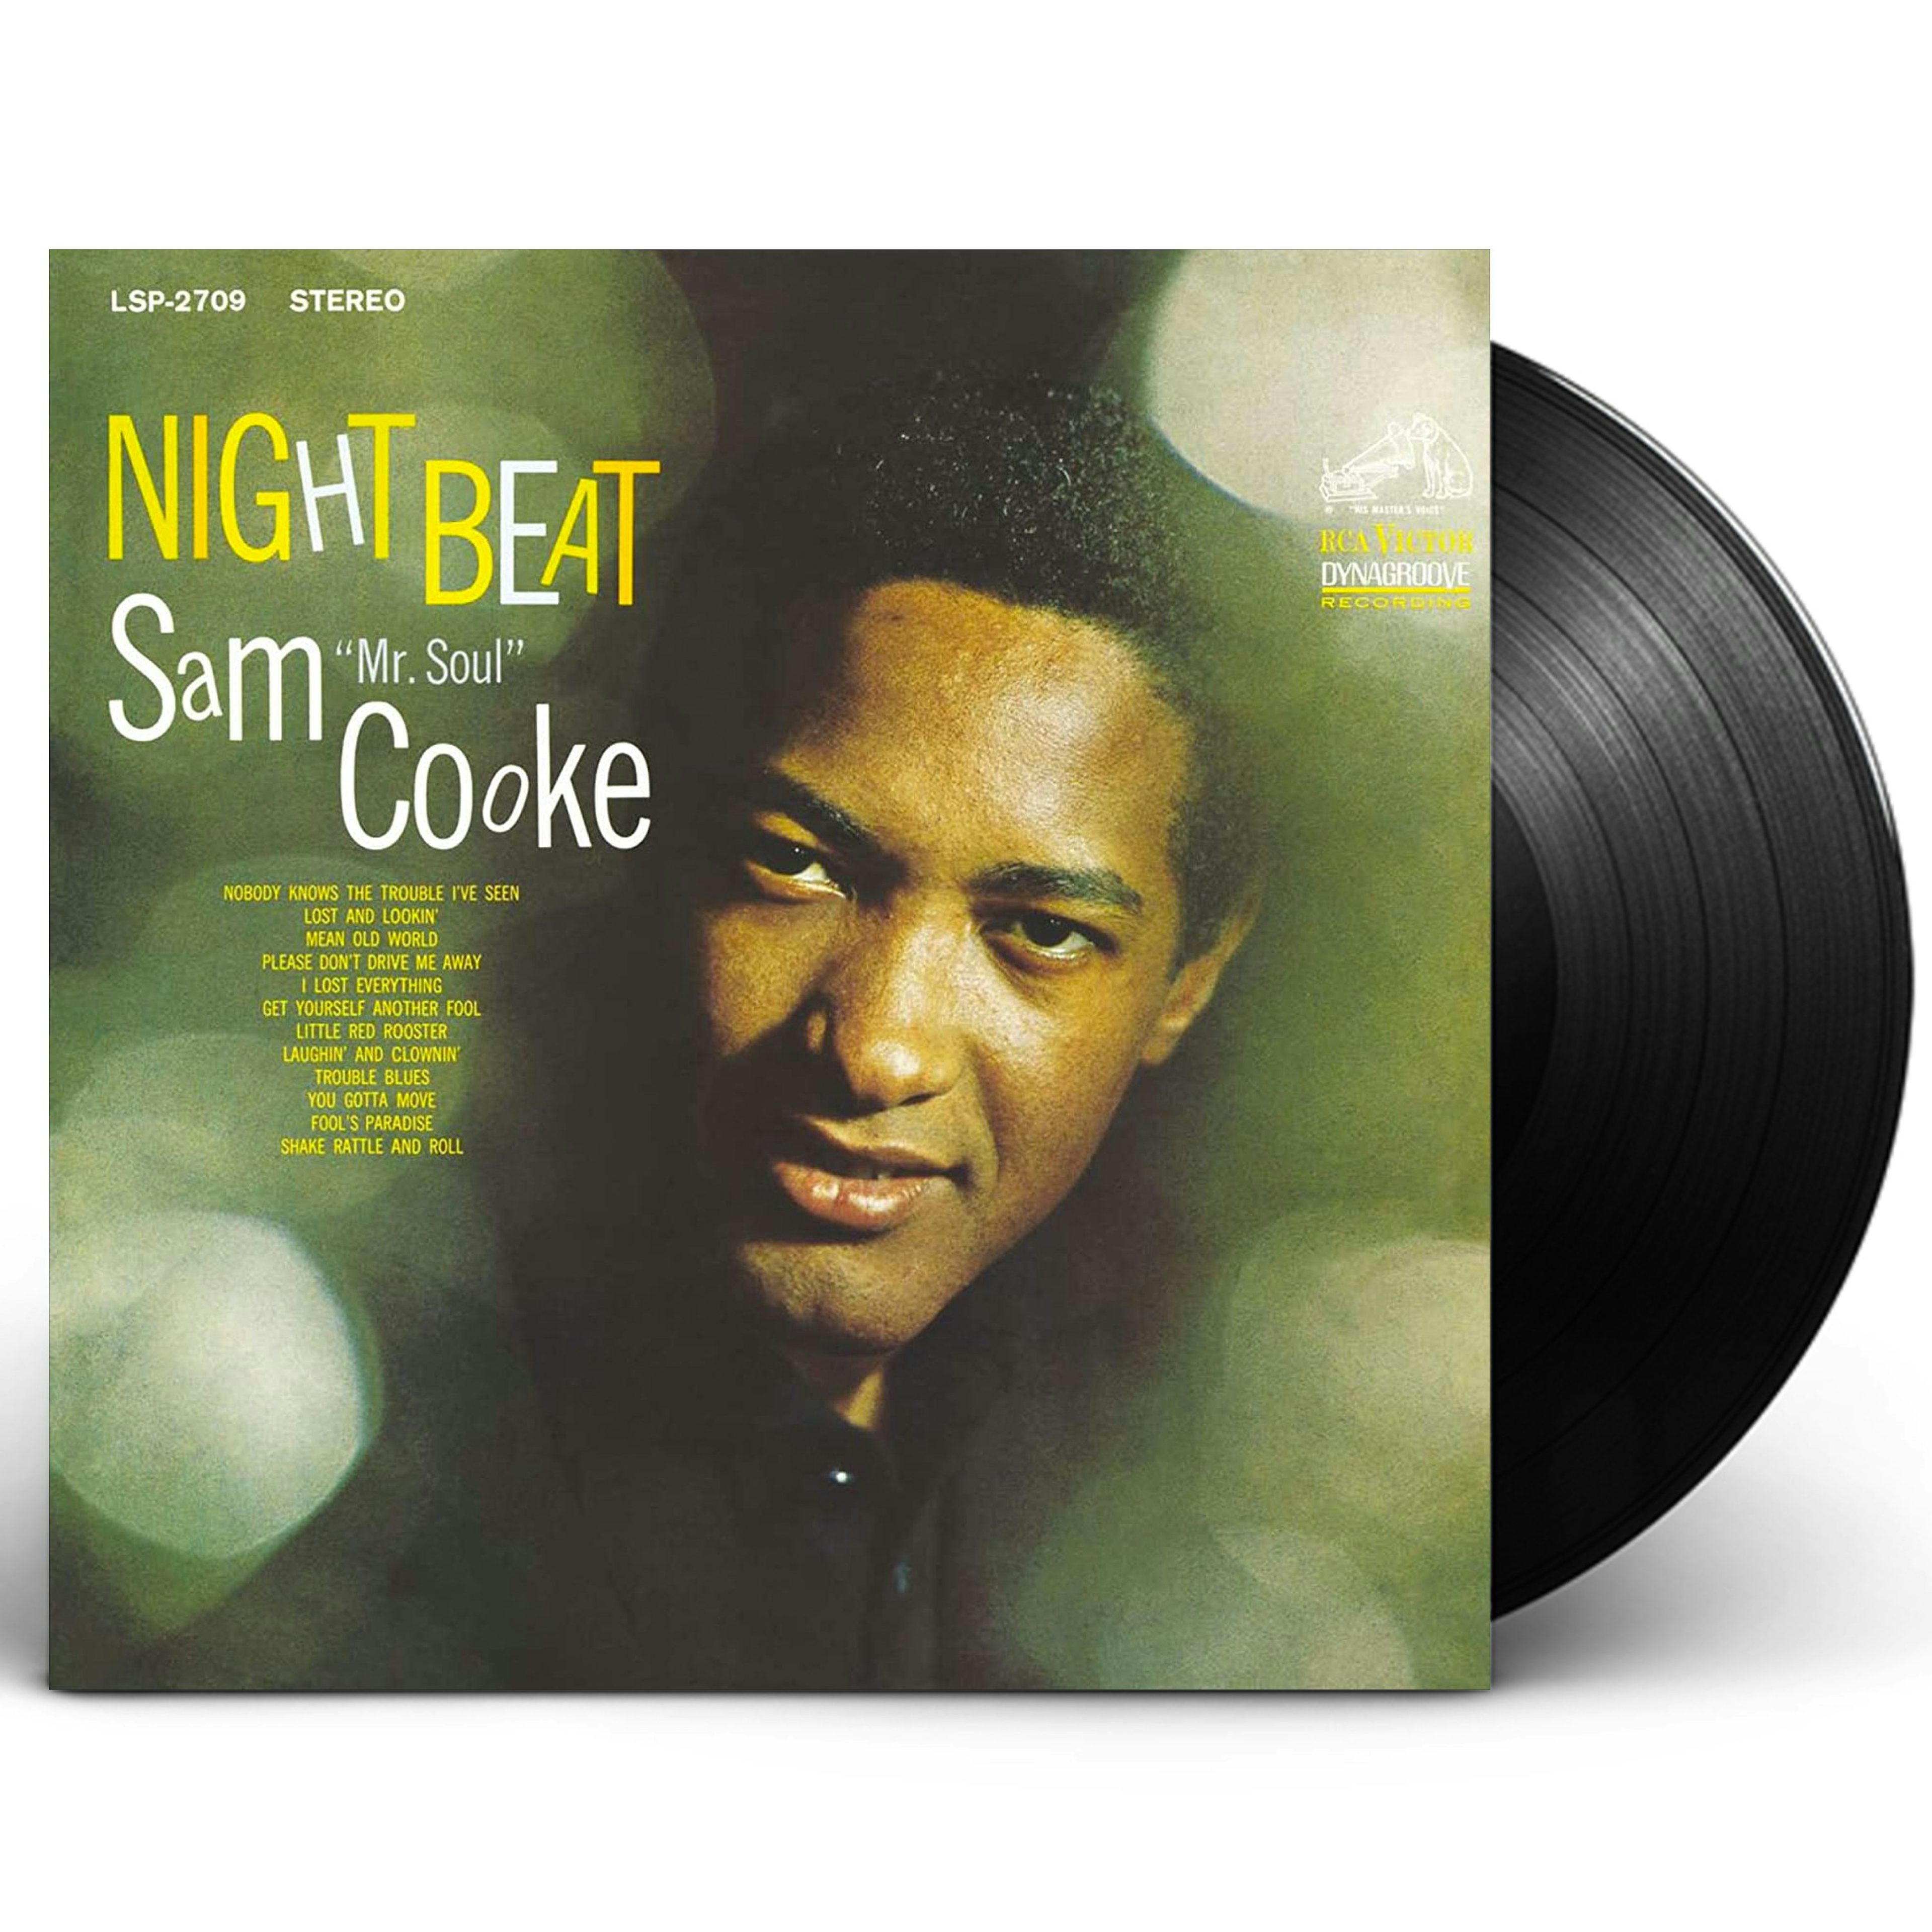 Sam Cooke "Night Beat" 180 Gram Vinyl